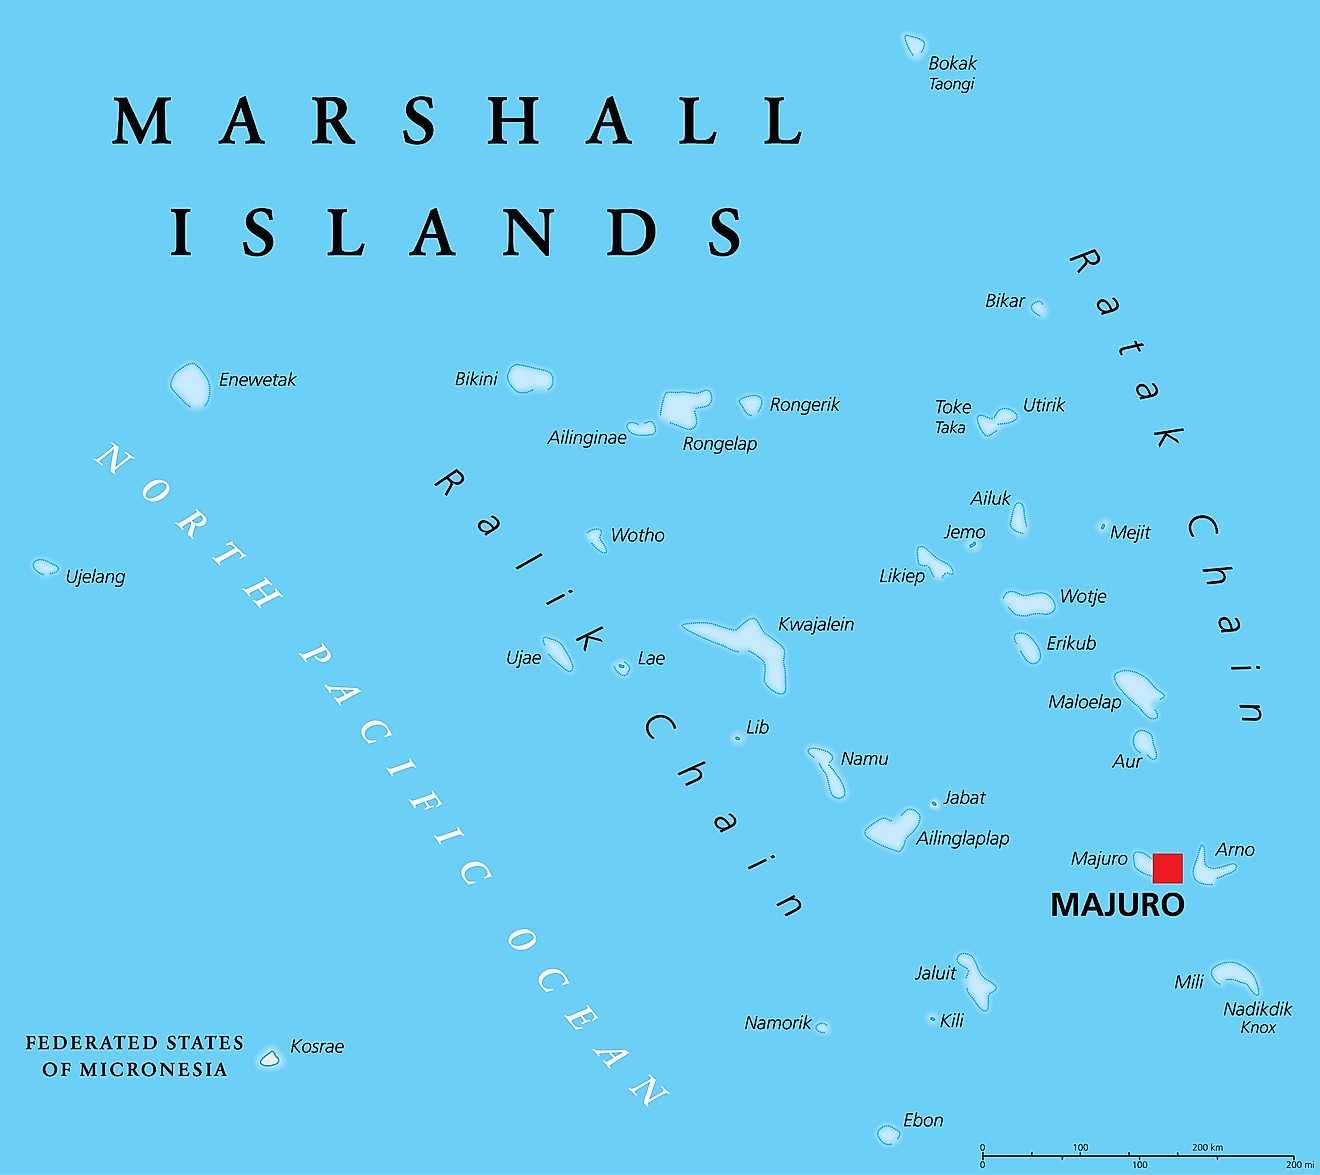 Mapa Político de las Islas Marshall mostrando la capital Majuro.